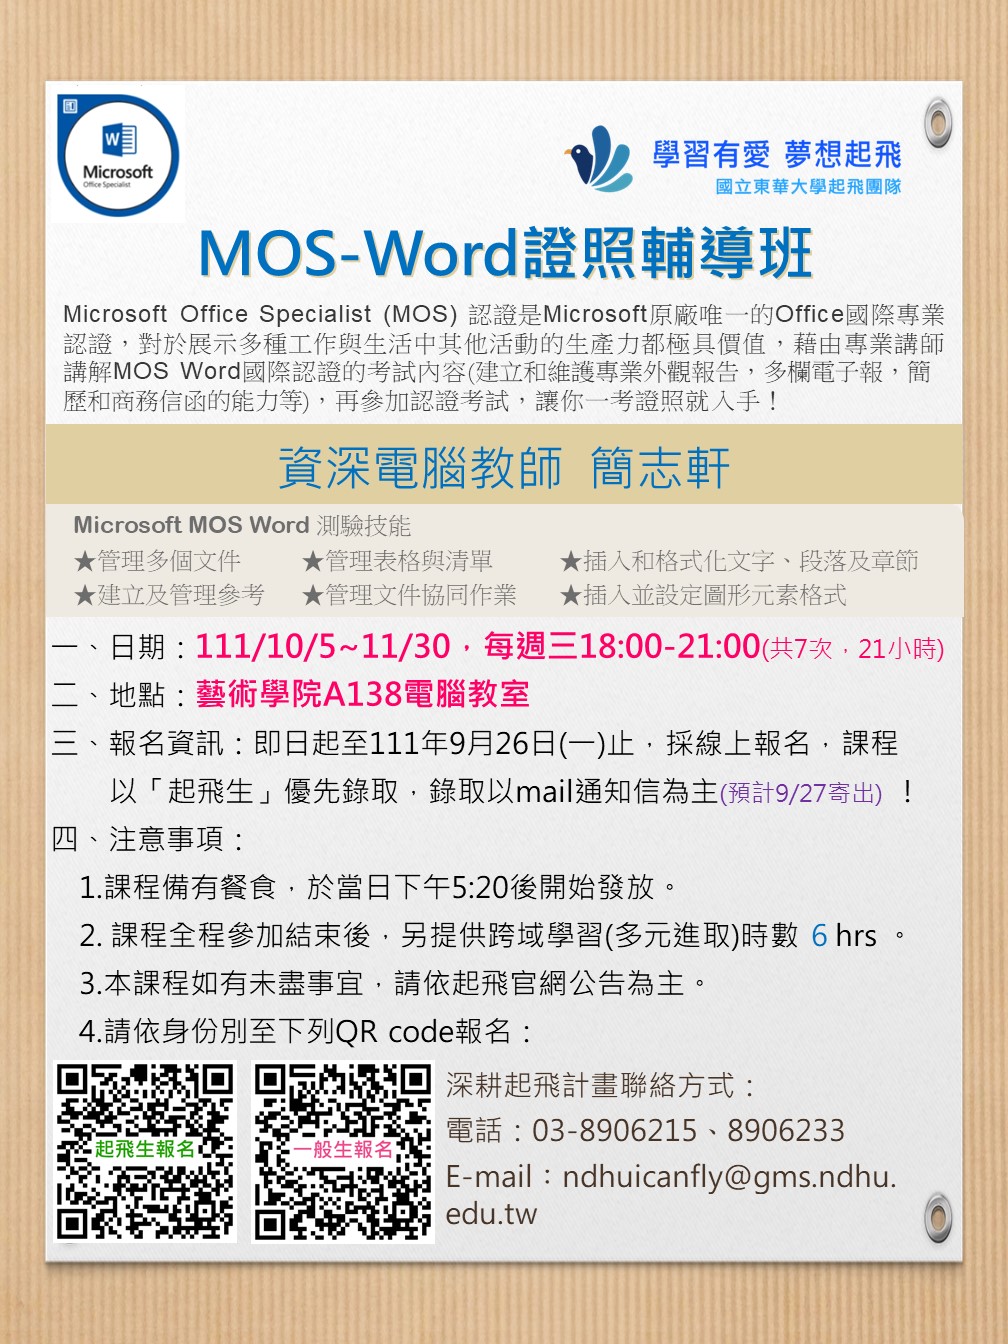 MOS-Word證照輔導班